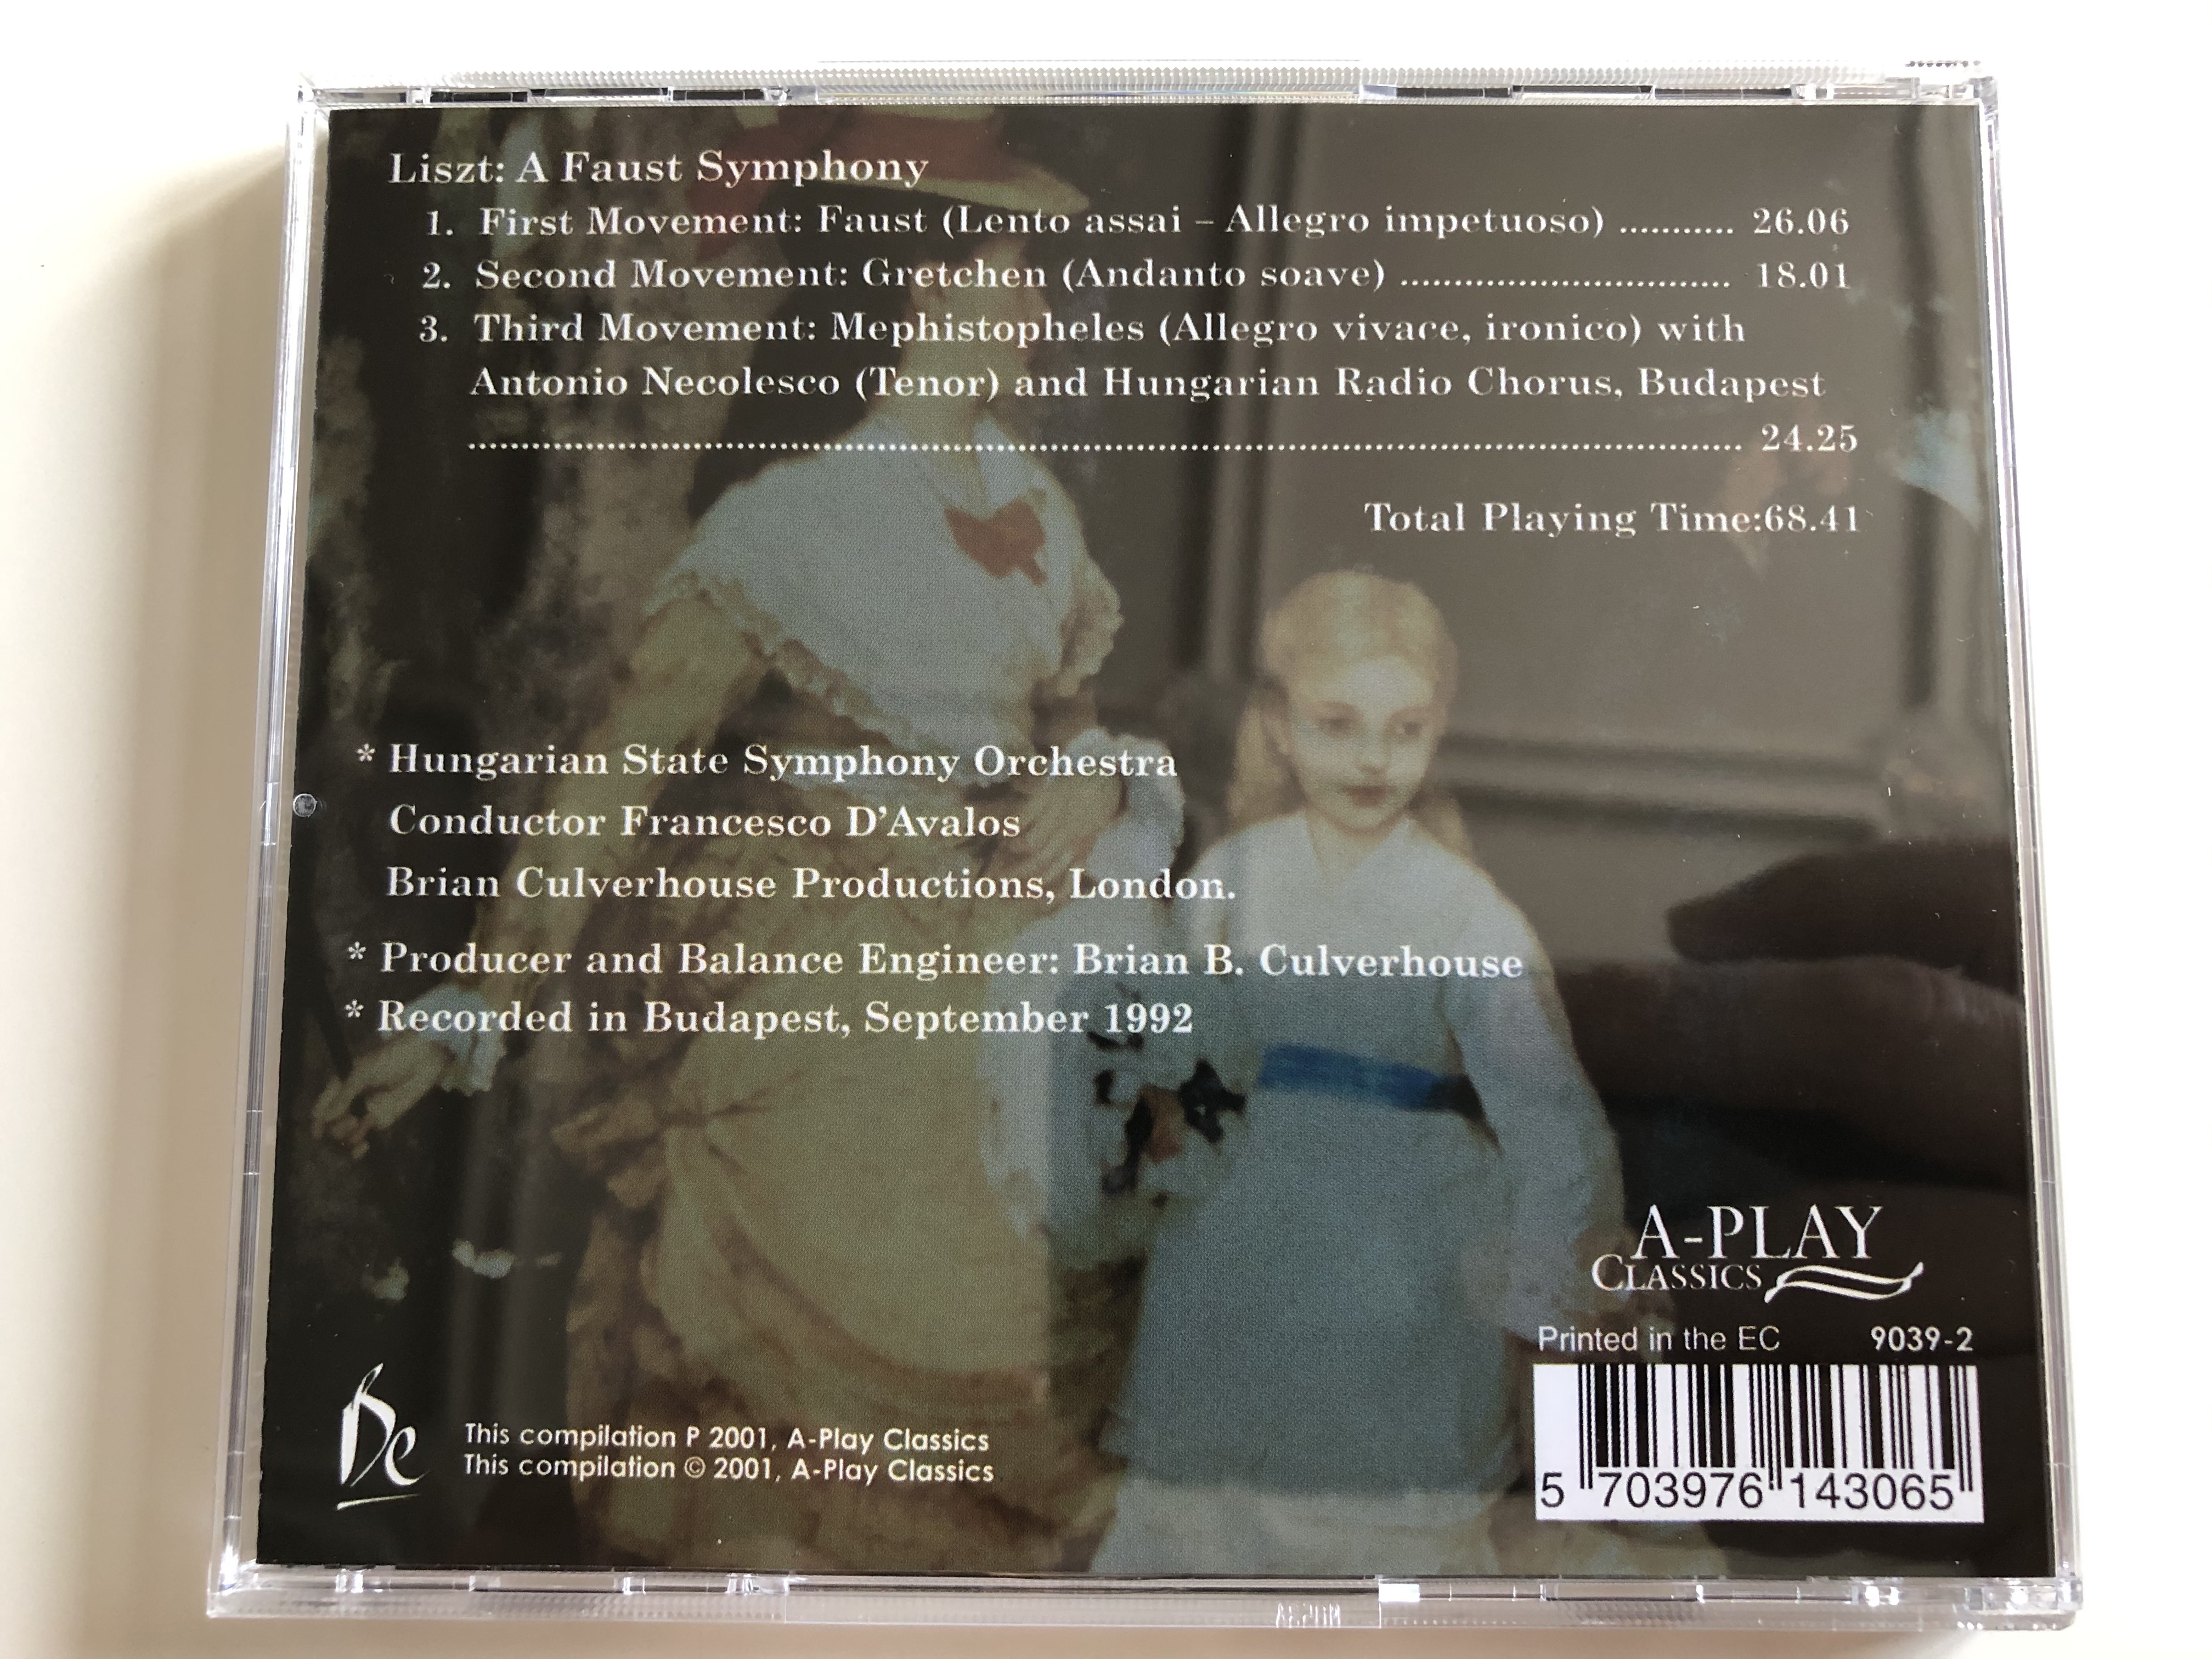 Liszt - A Faust Symphony / Hungarian State Symphony Orchestra / Conductor:  Francesco D'Avalos / A-Play Classics Audio CD 2001 / 9039-2 -  bibleinmylanguage